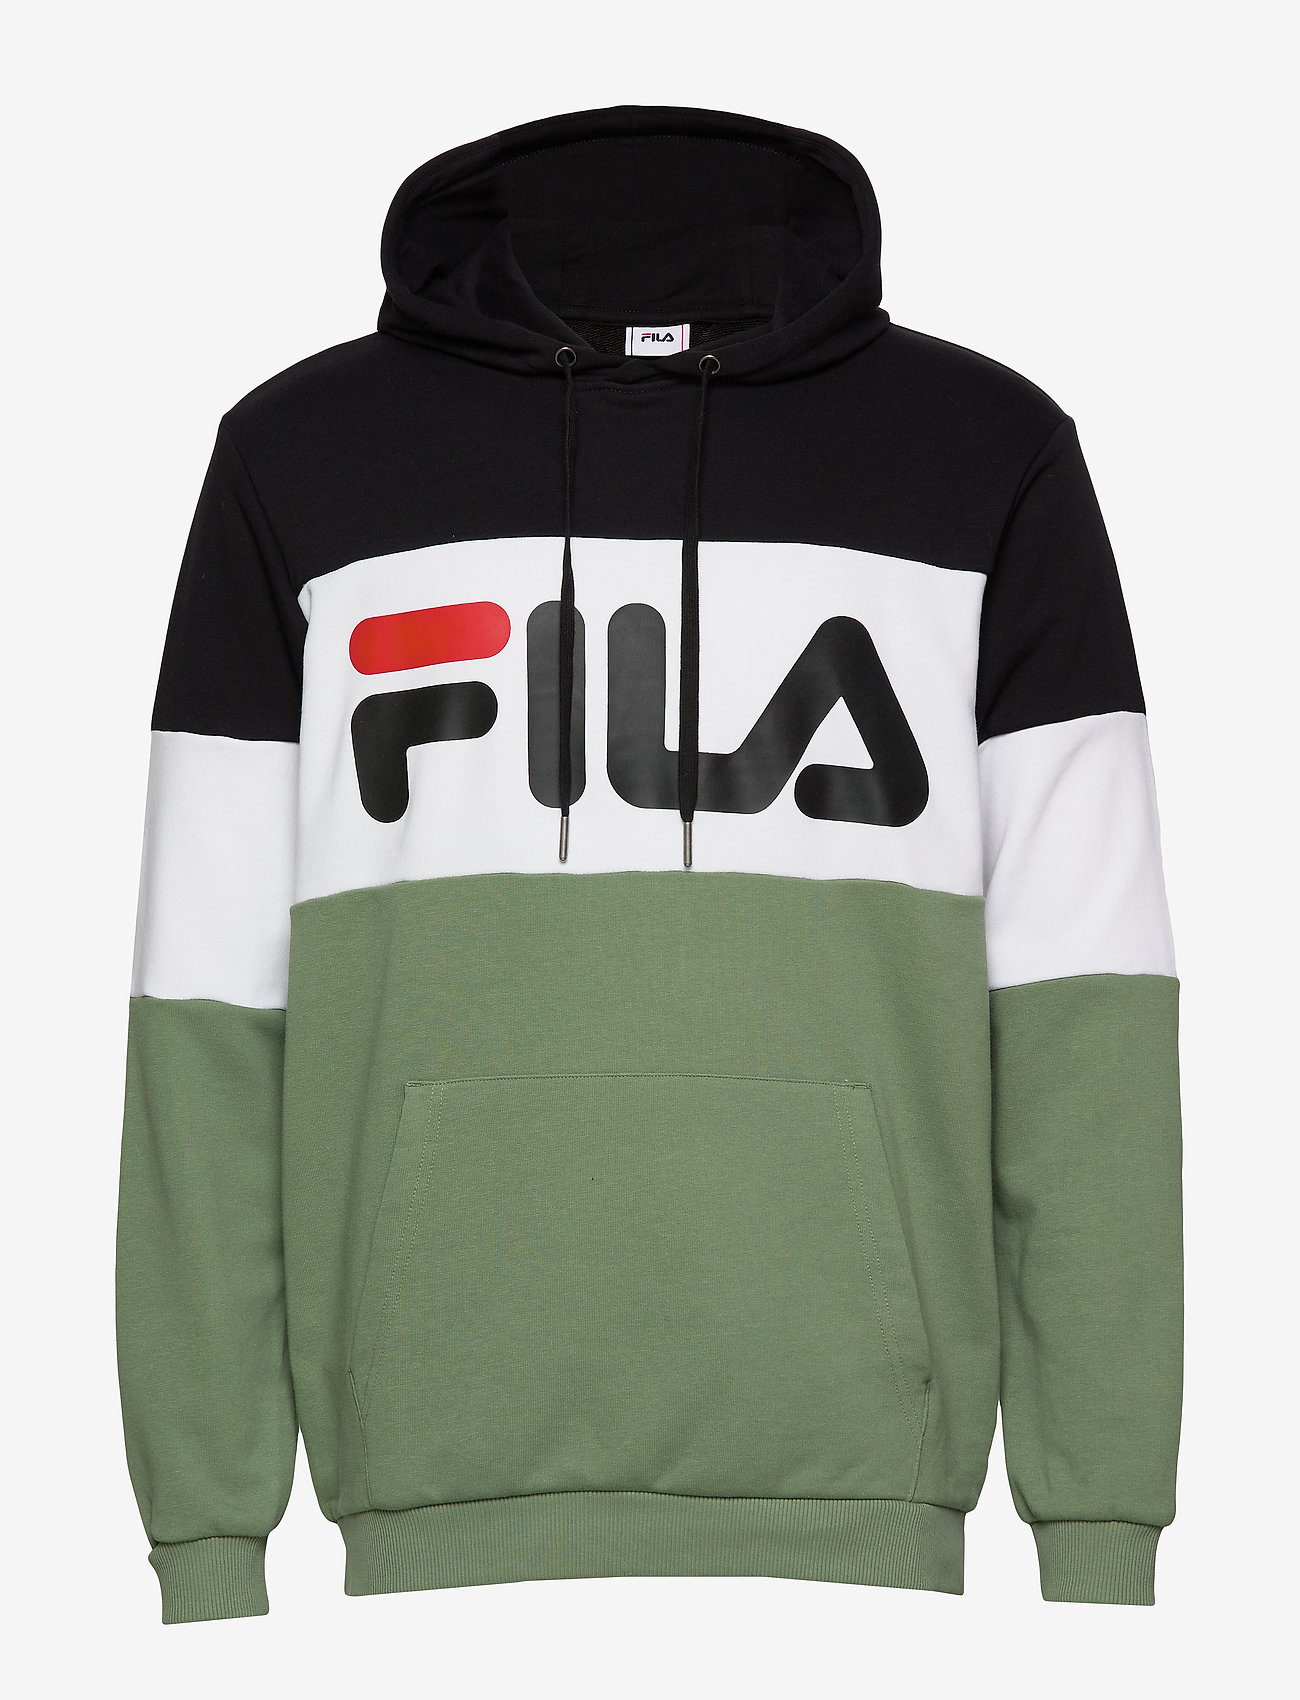 fila hoodies for men